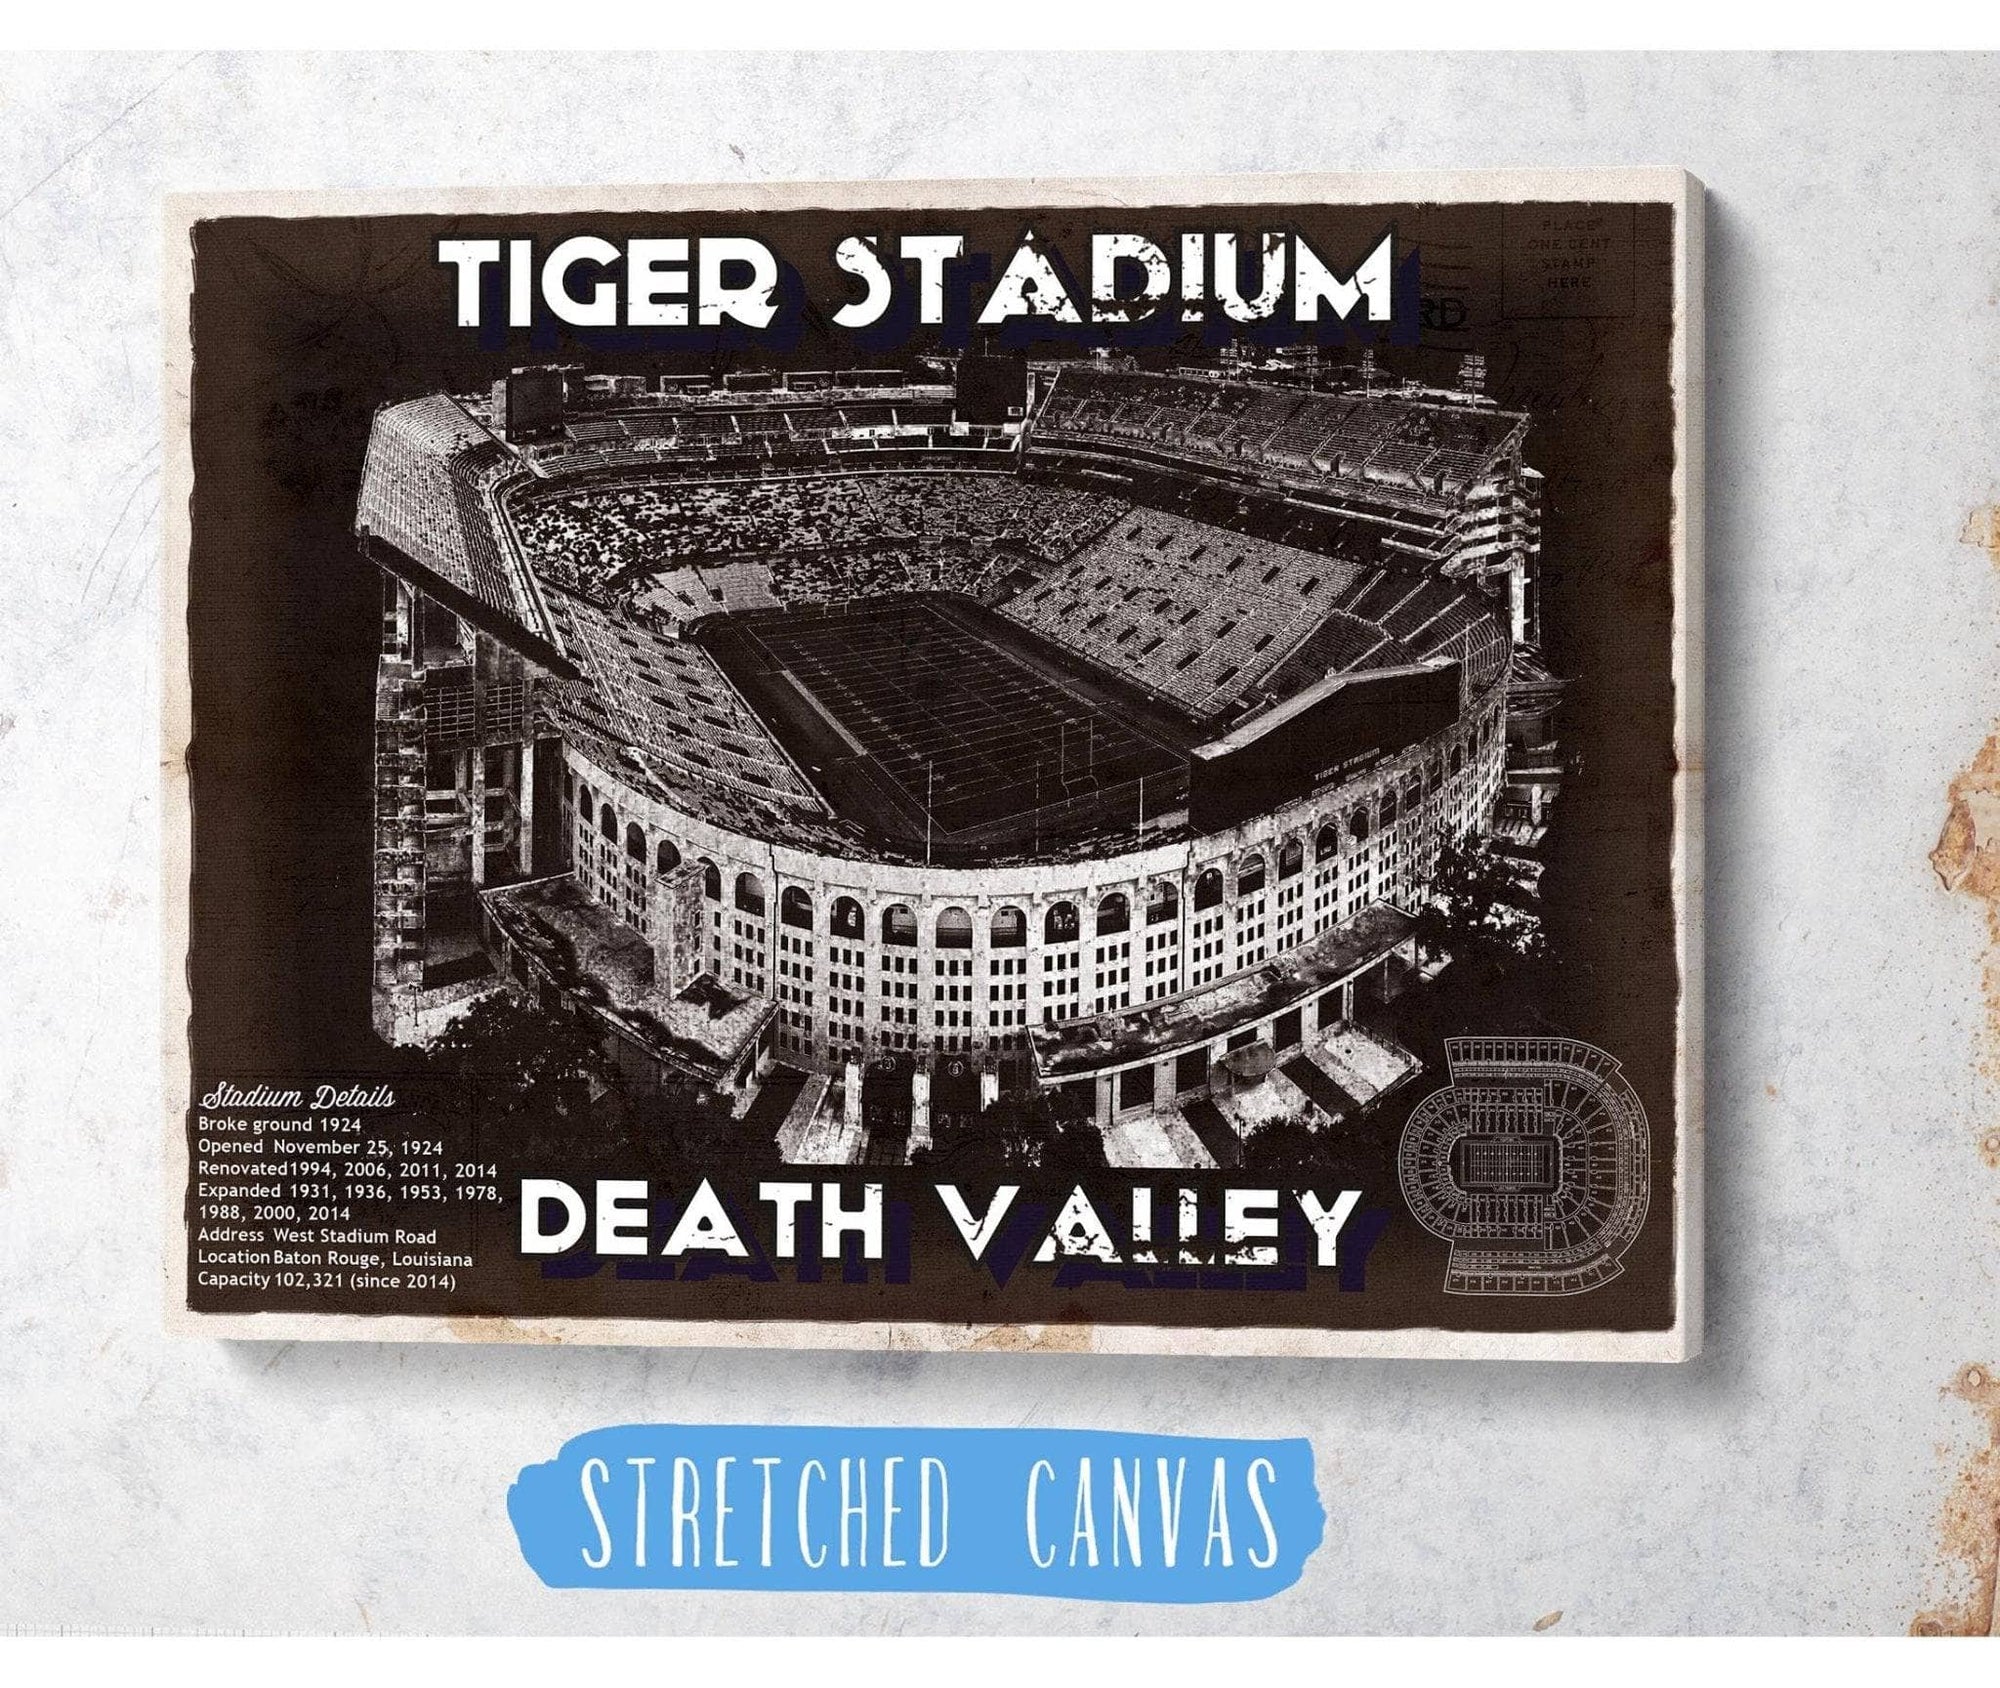 Cutler West College Football Collection Tiger Stadium Art - LSU Tigers Vintage Stadium & Blueprint Art Print